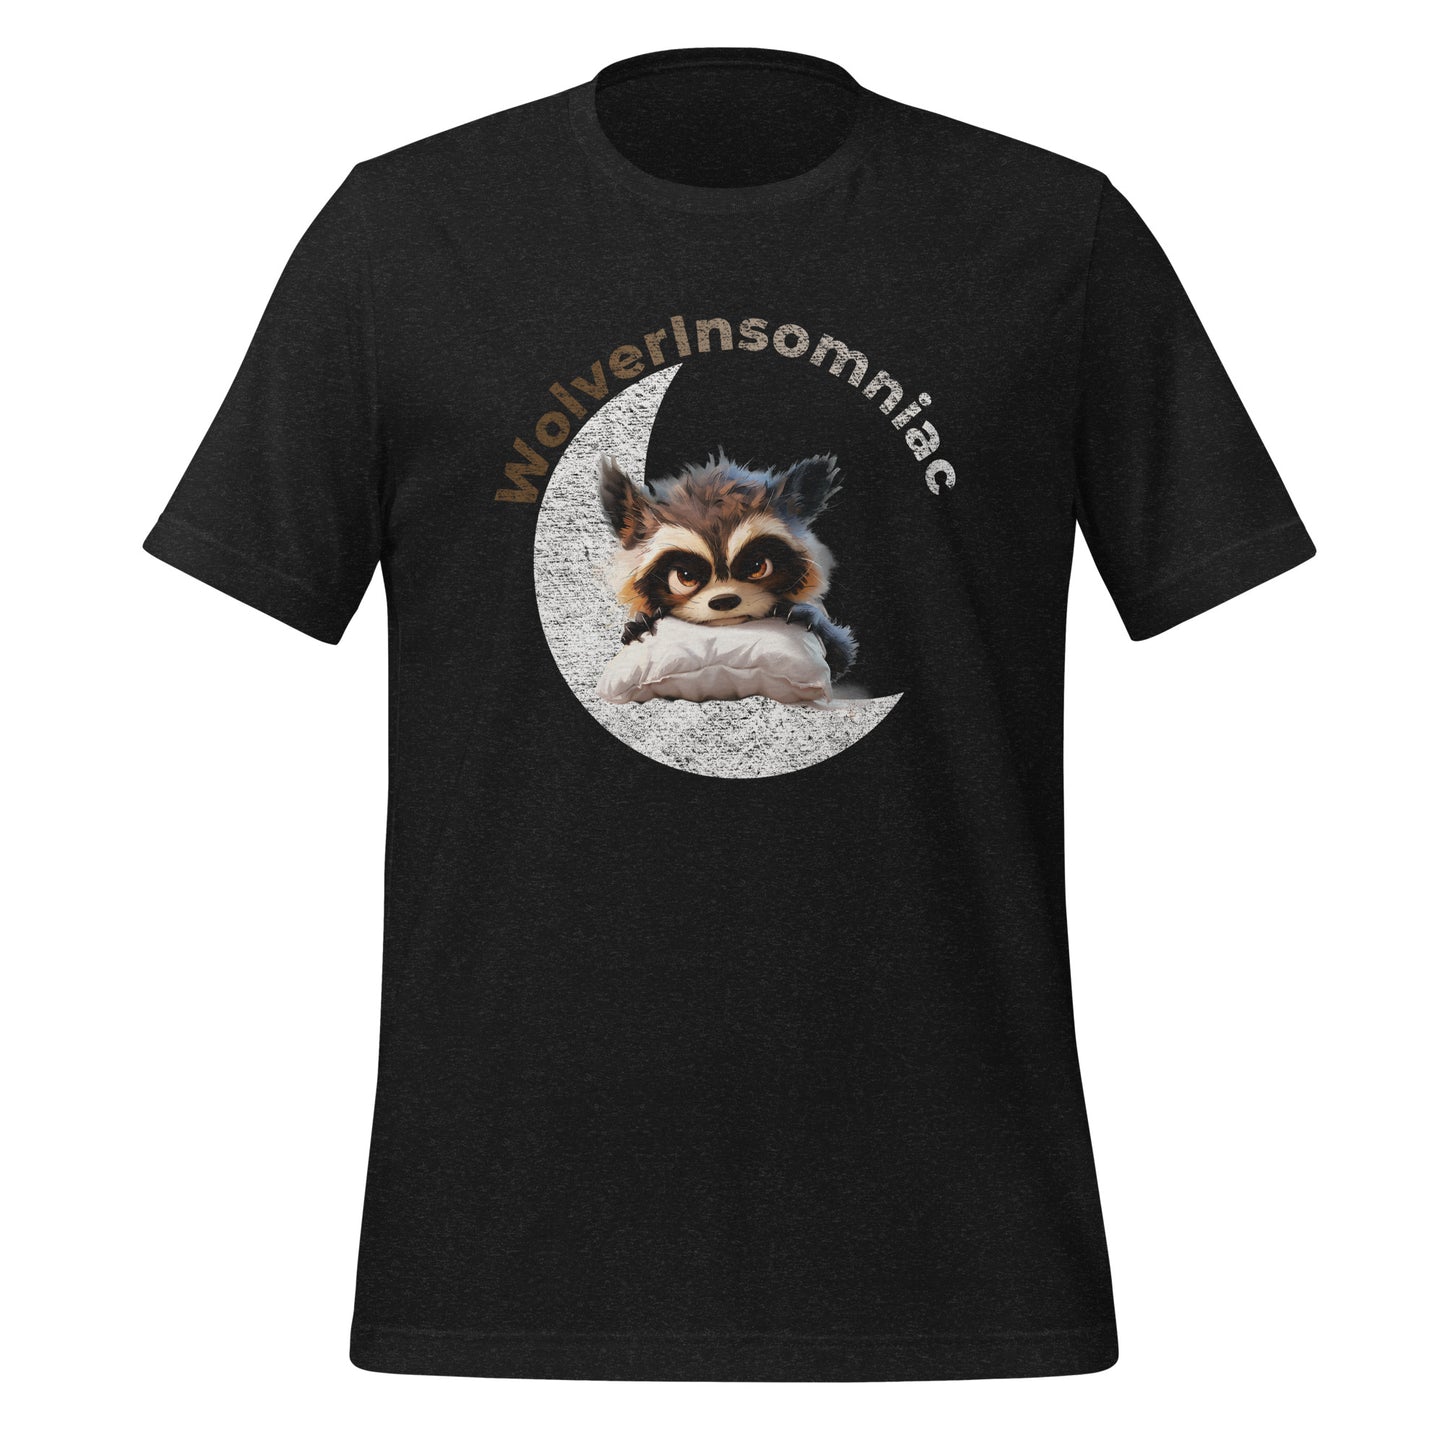 WolverInsomniac, Insomniac Wolverine, Insomnia, Animals, Sleep Disorders, Graphic Tee Shirt, Black